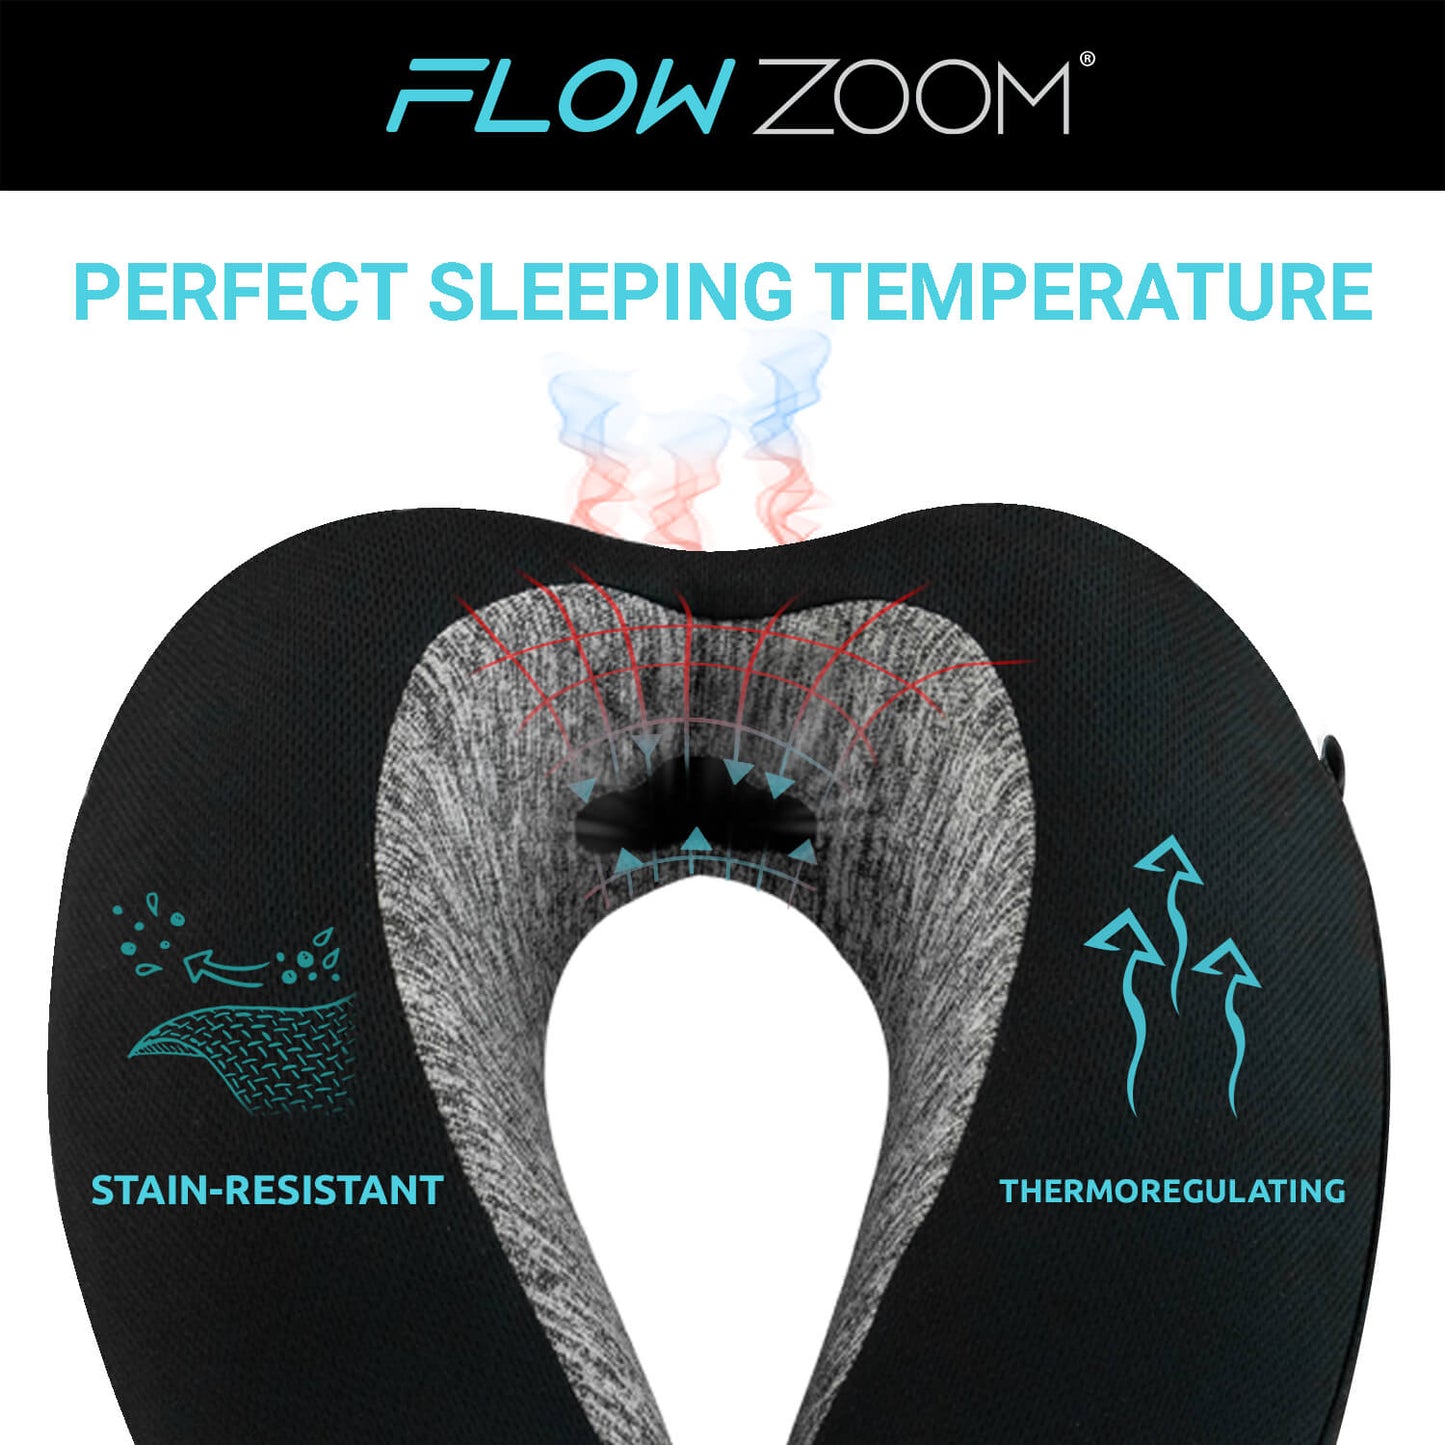 DREAM Memory Foam Pillow for perfect sleeping temperature